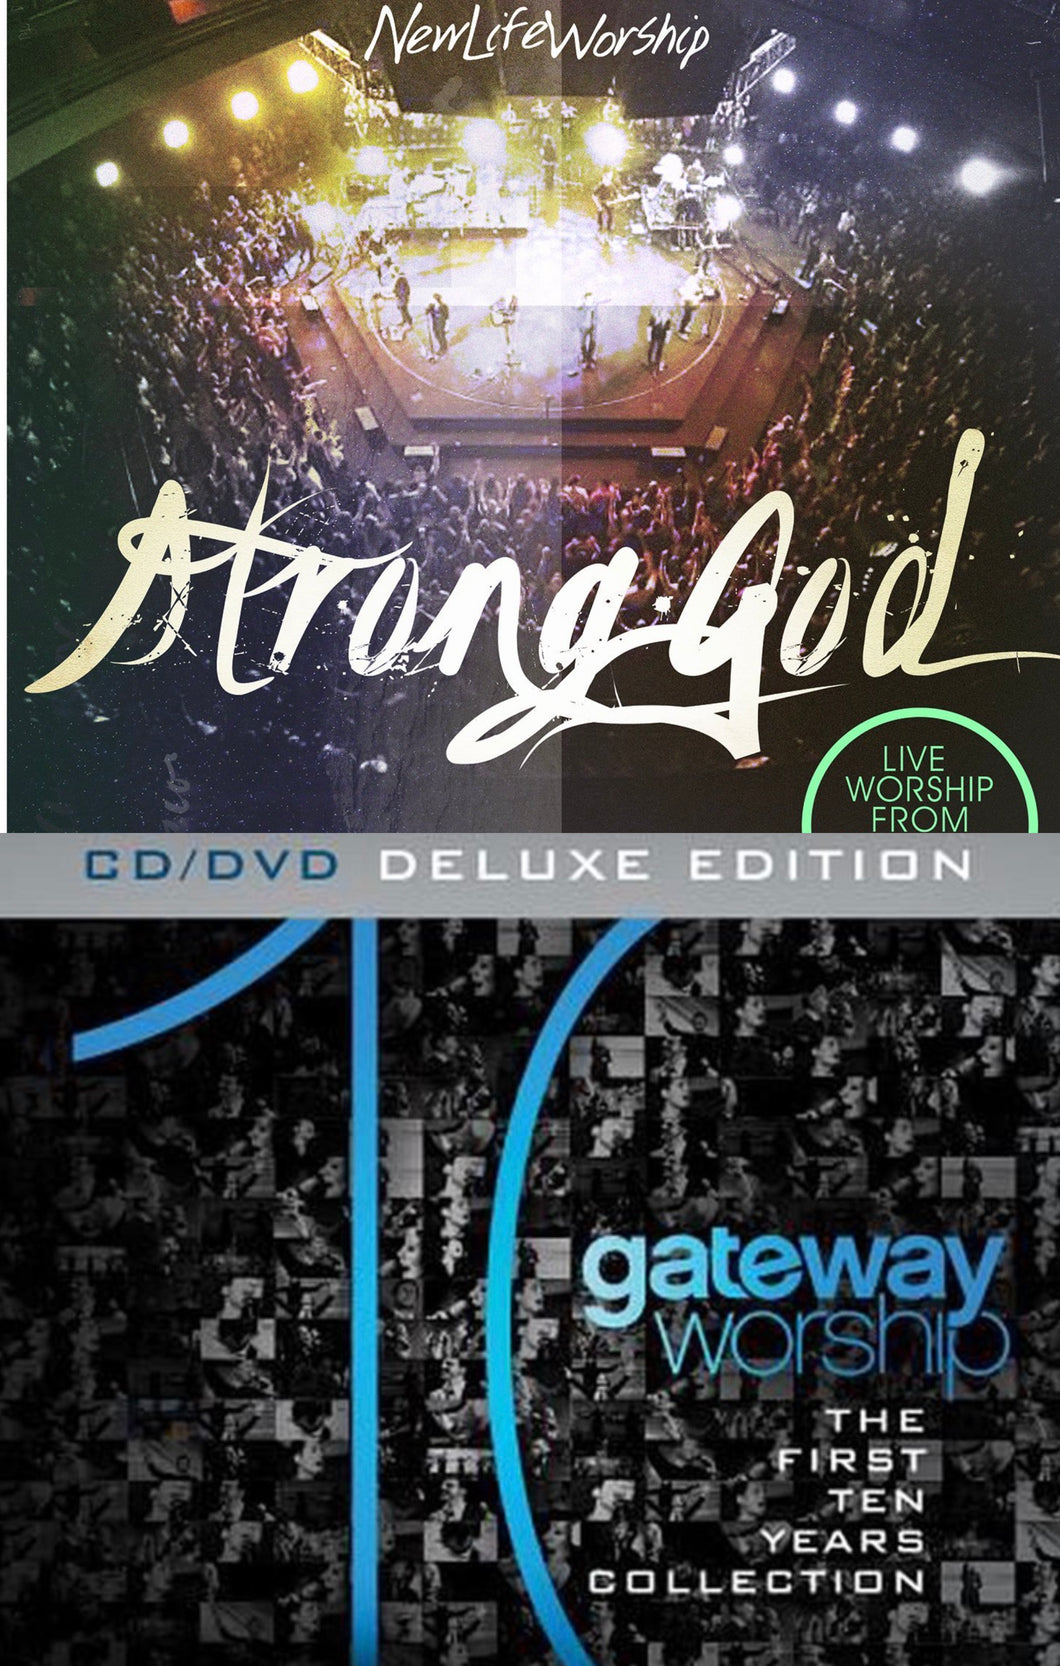 New Life Worship Strong God + Gateway Worship First Ten Years 2CD/DVD